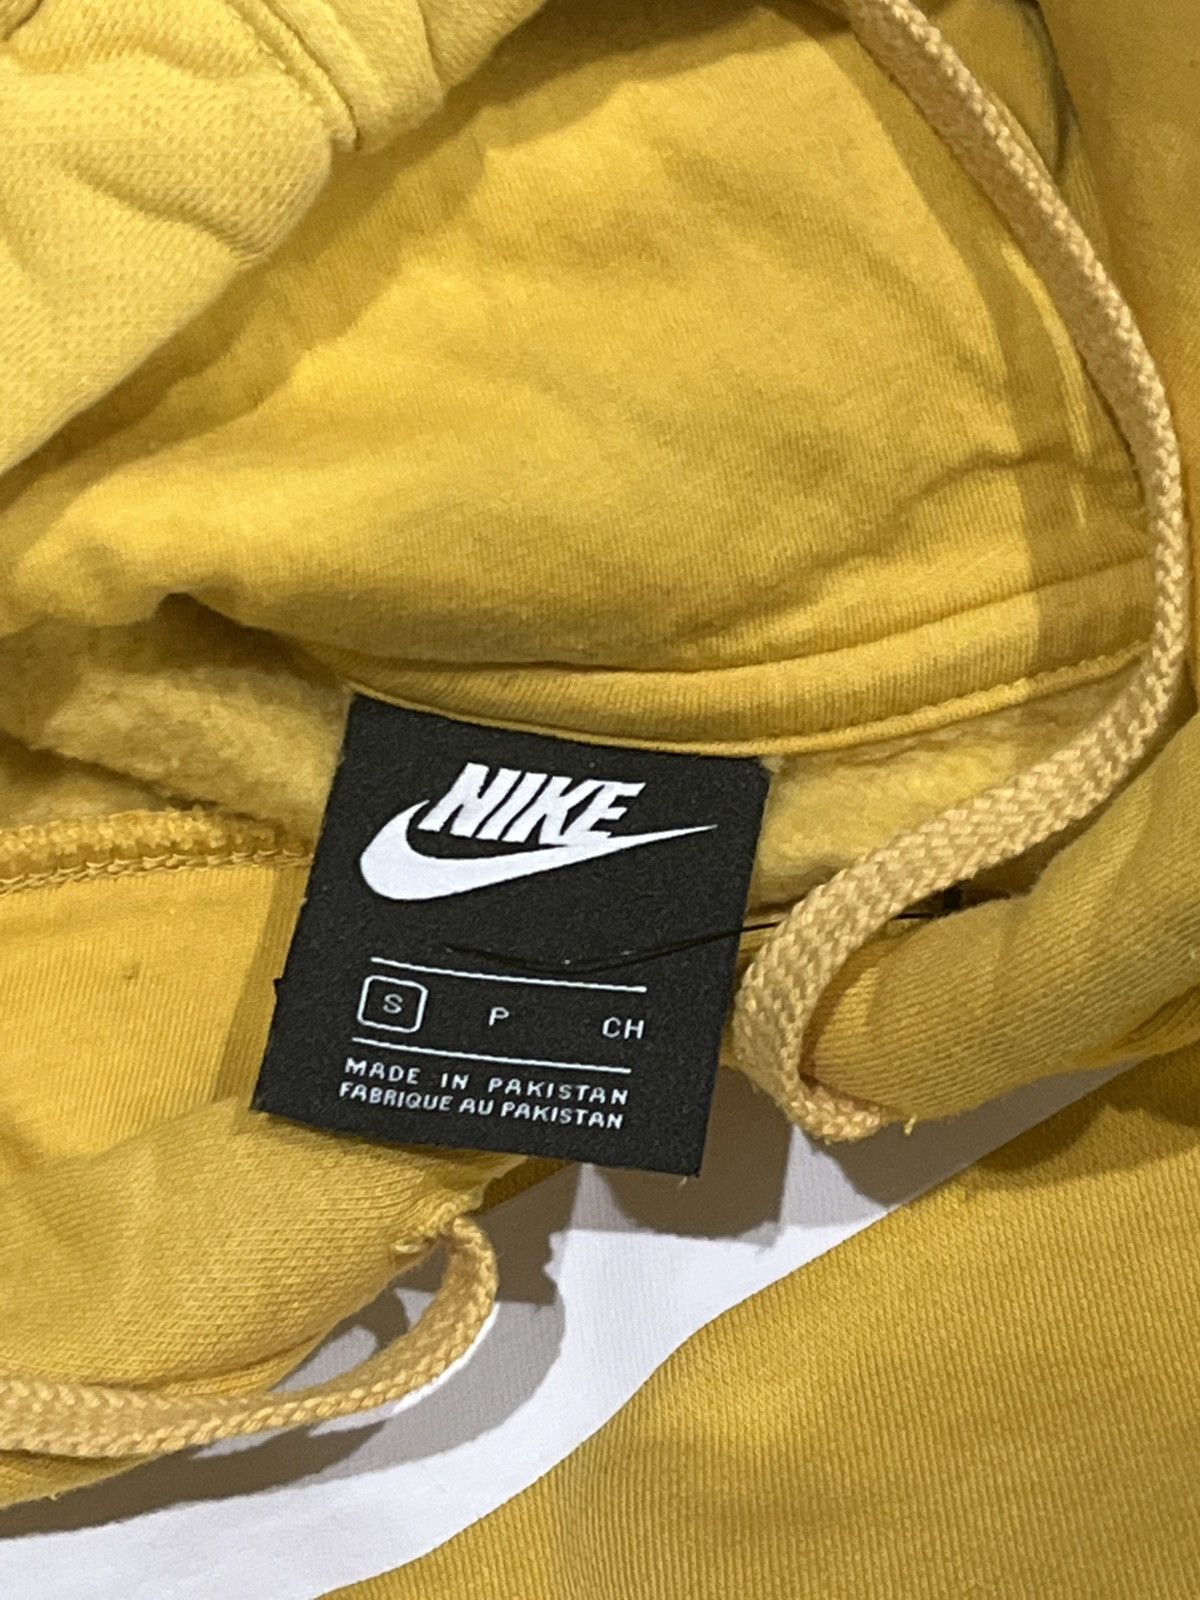 Nike Nike Swoosh Hoodie Size US S / EU 44-46 / 1 - 3 Preview